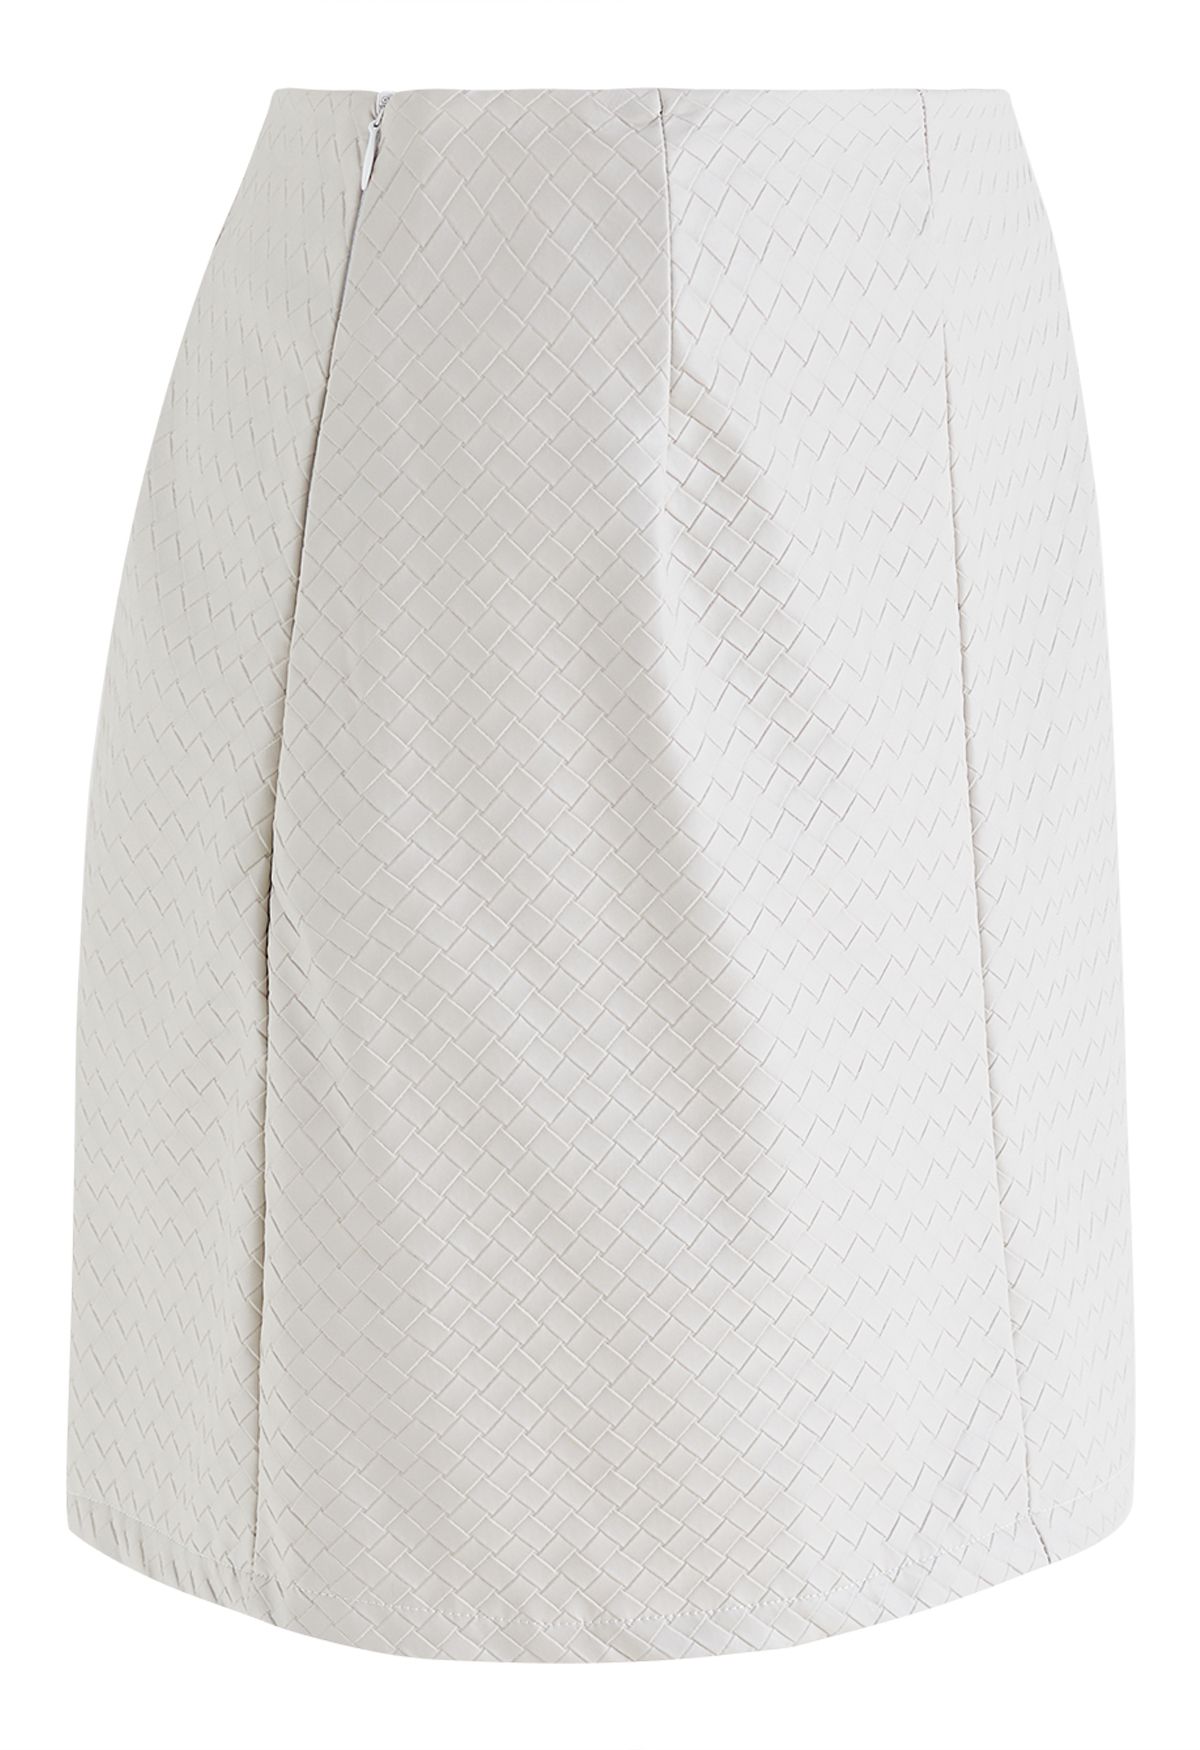 Woven Pattern Faux Leather Mini Skirt